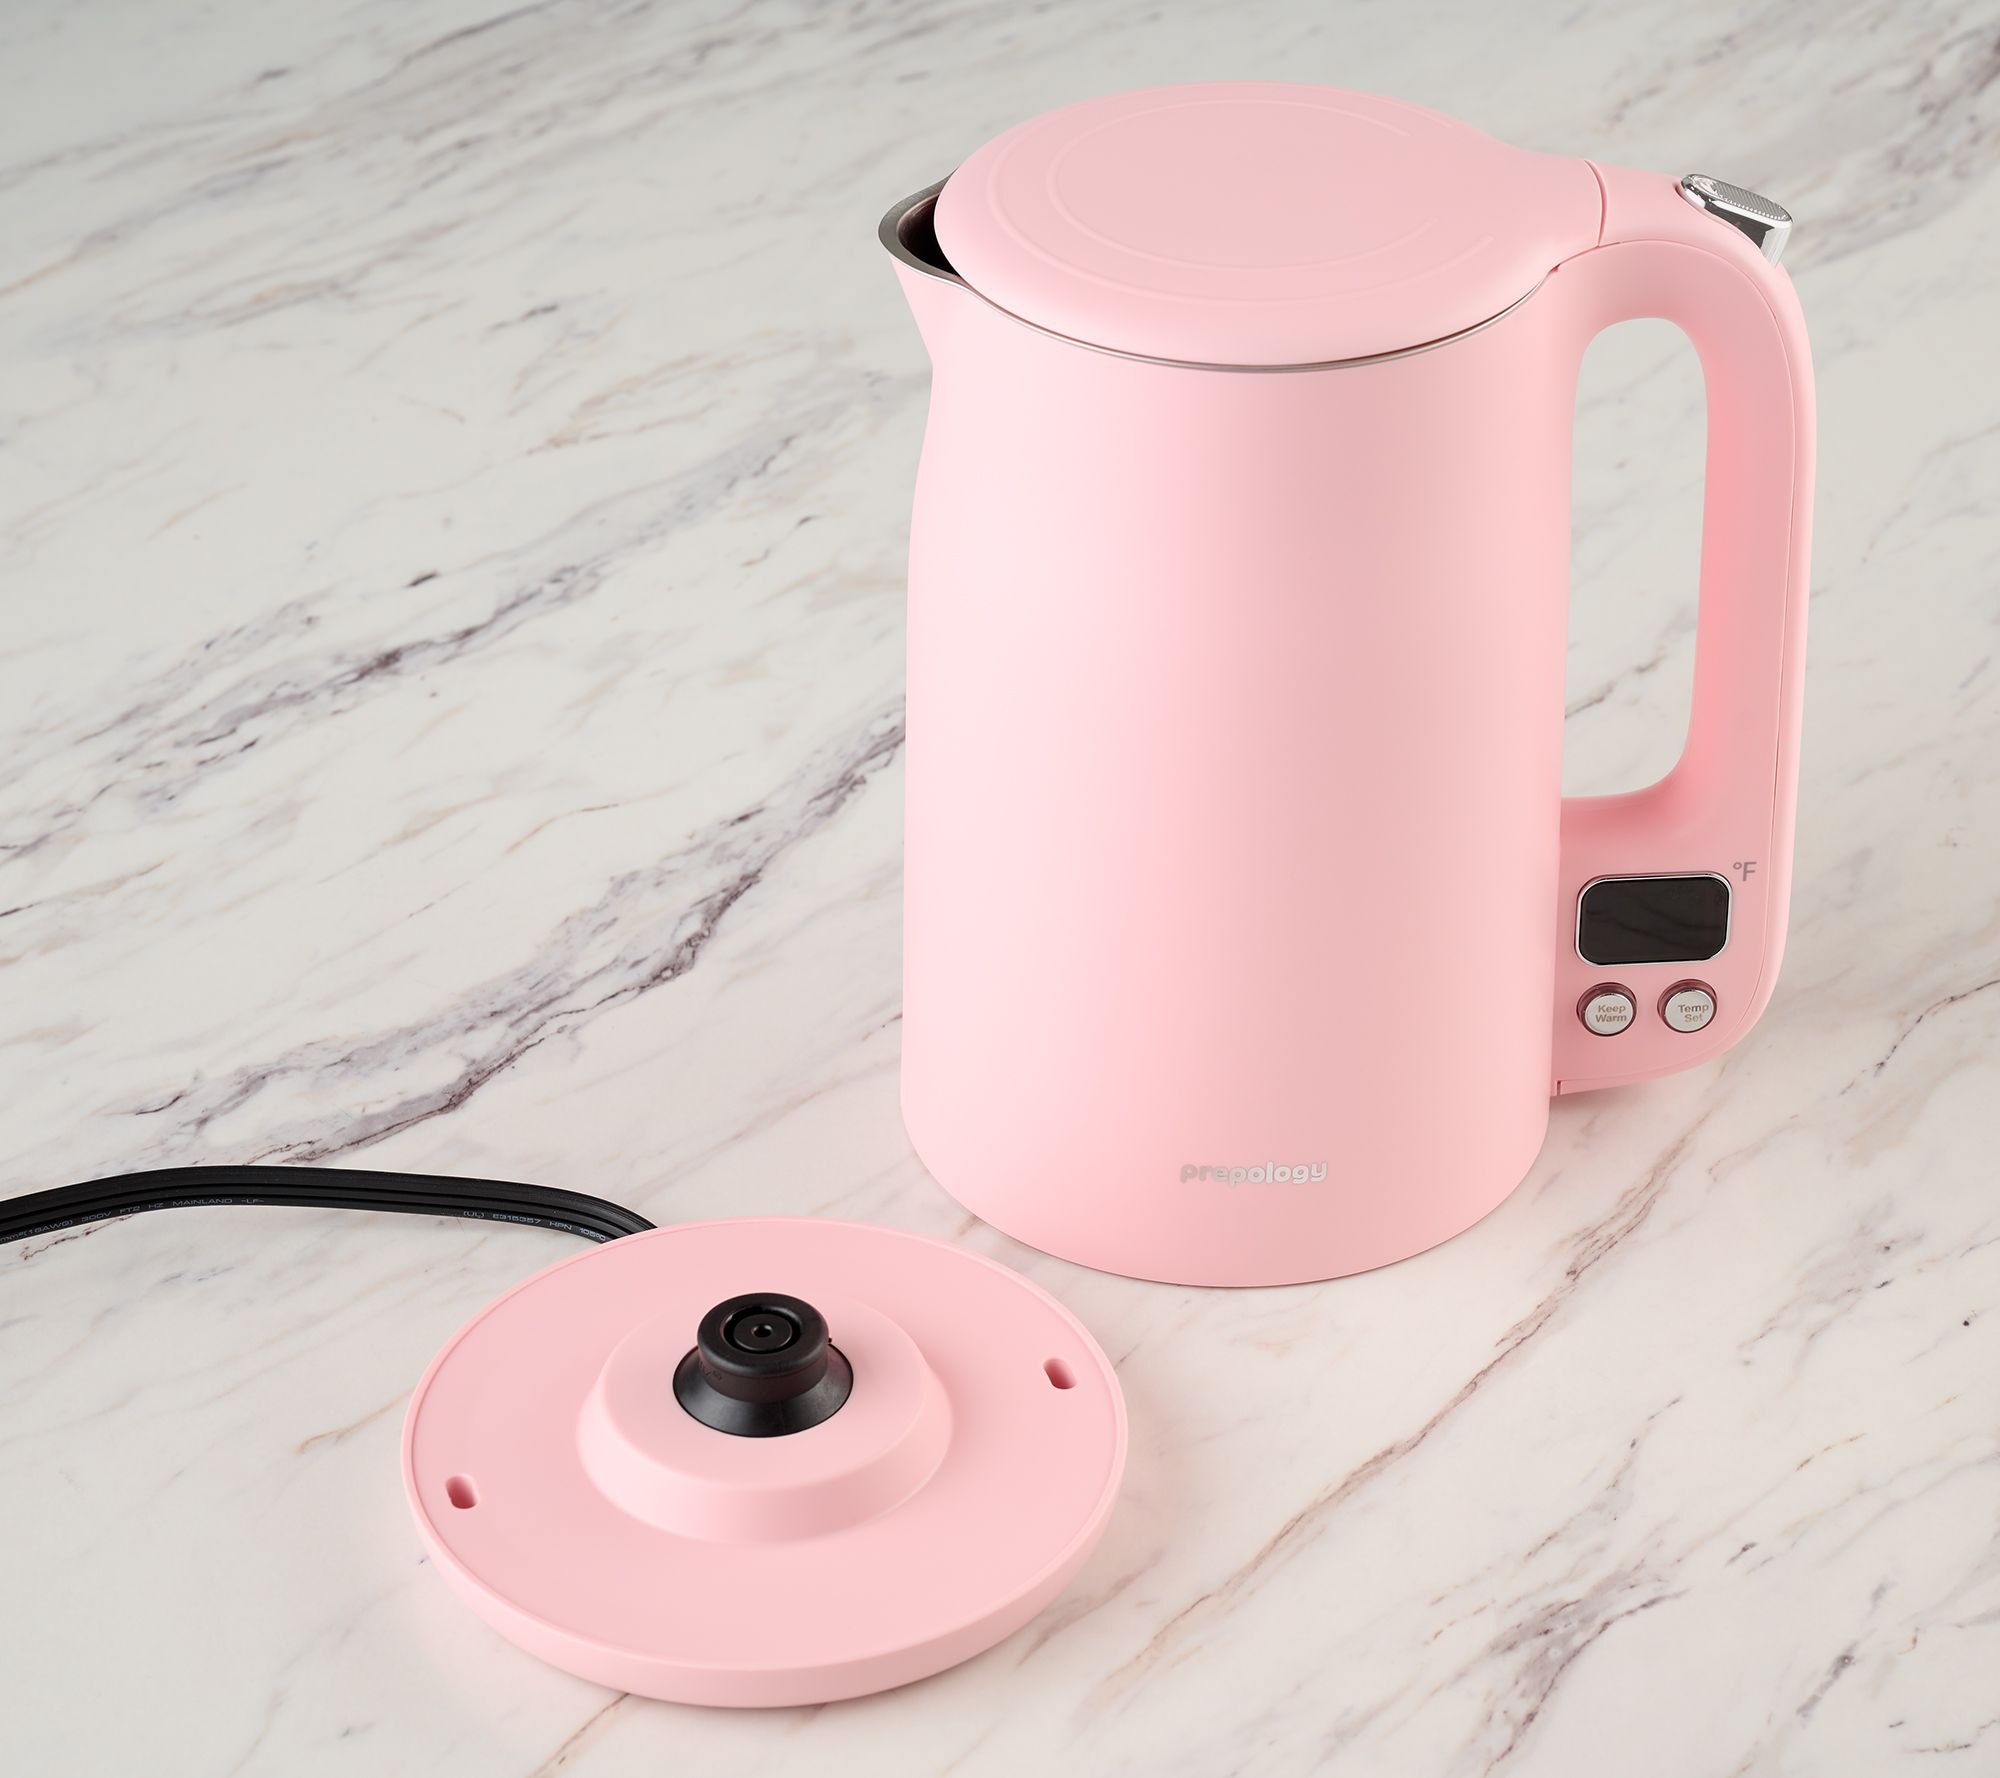 Bella Ceramic Corded Electric Tea Kettle - Silver Design -Heats Fast!  Preowned